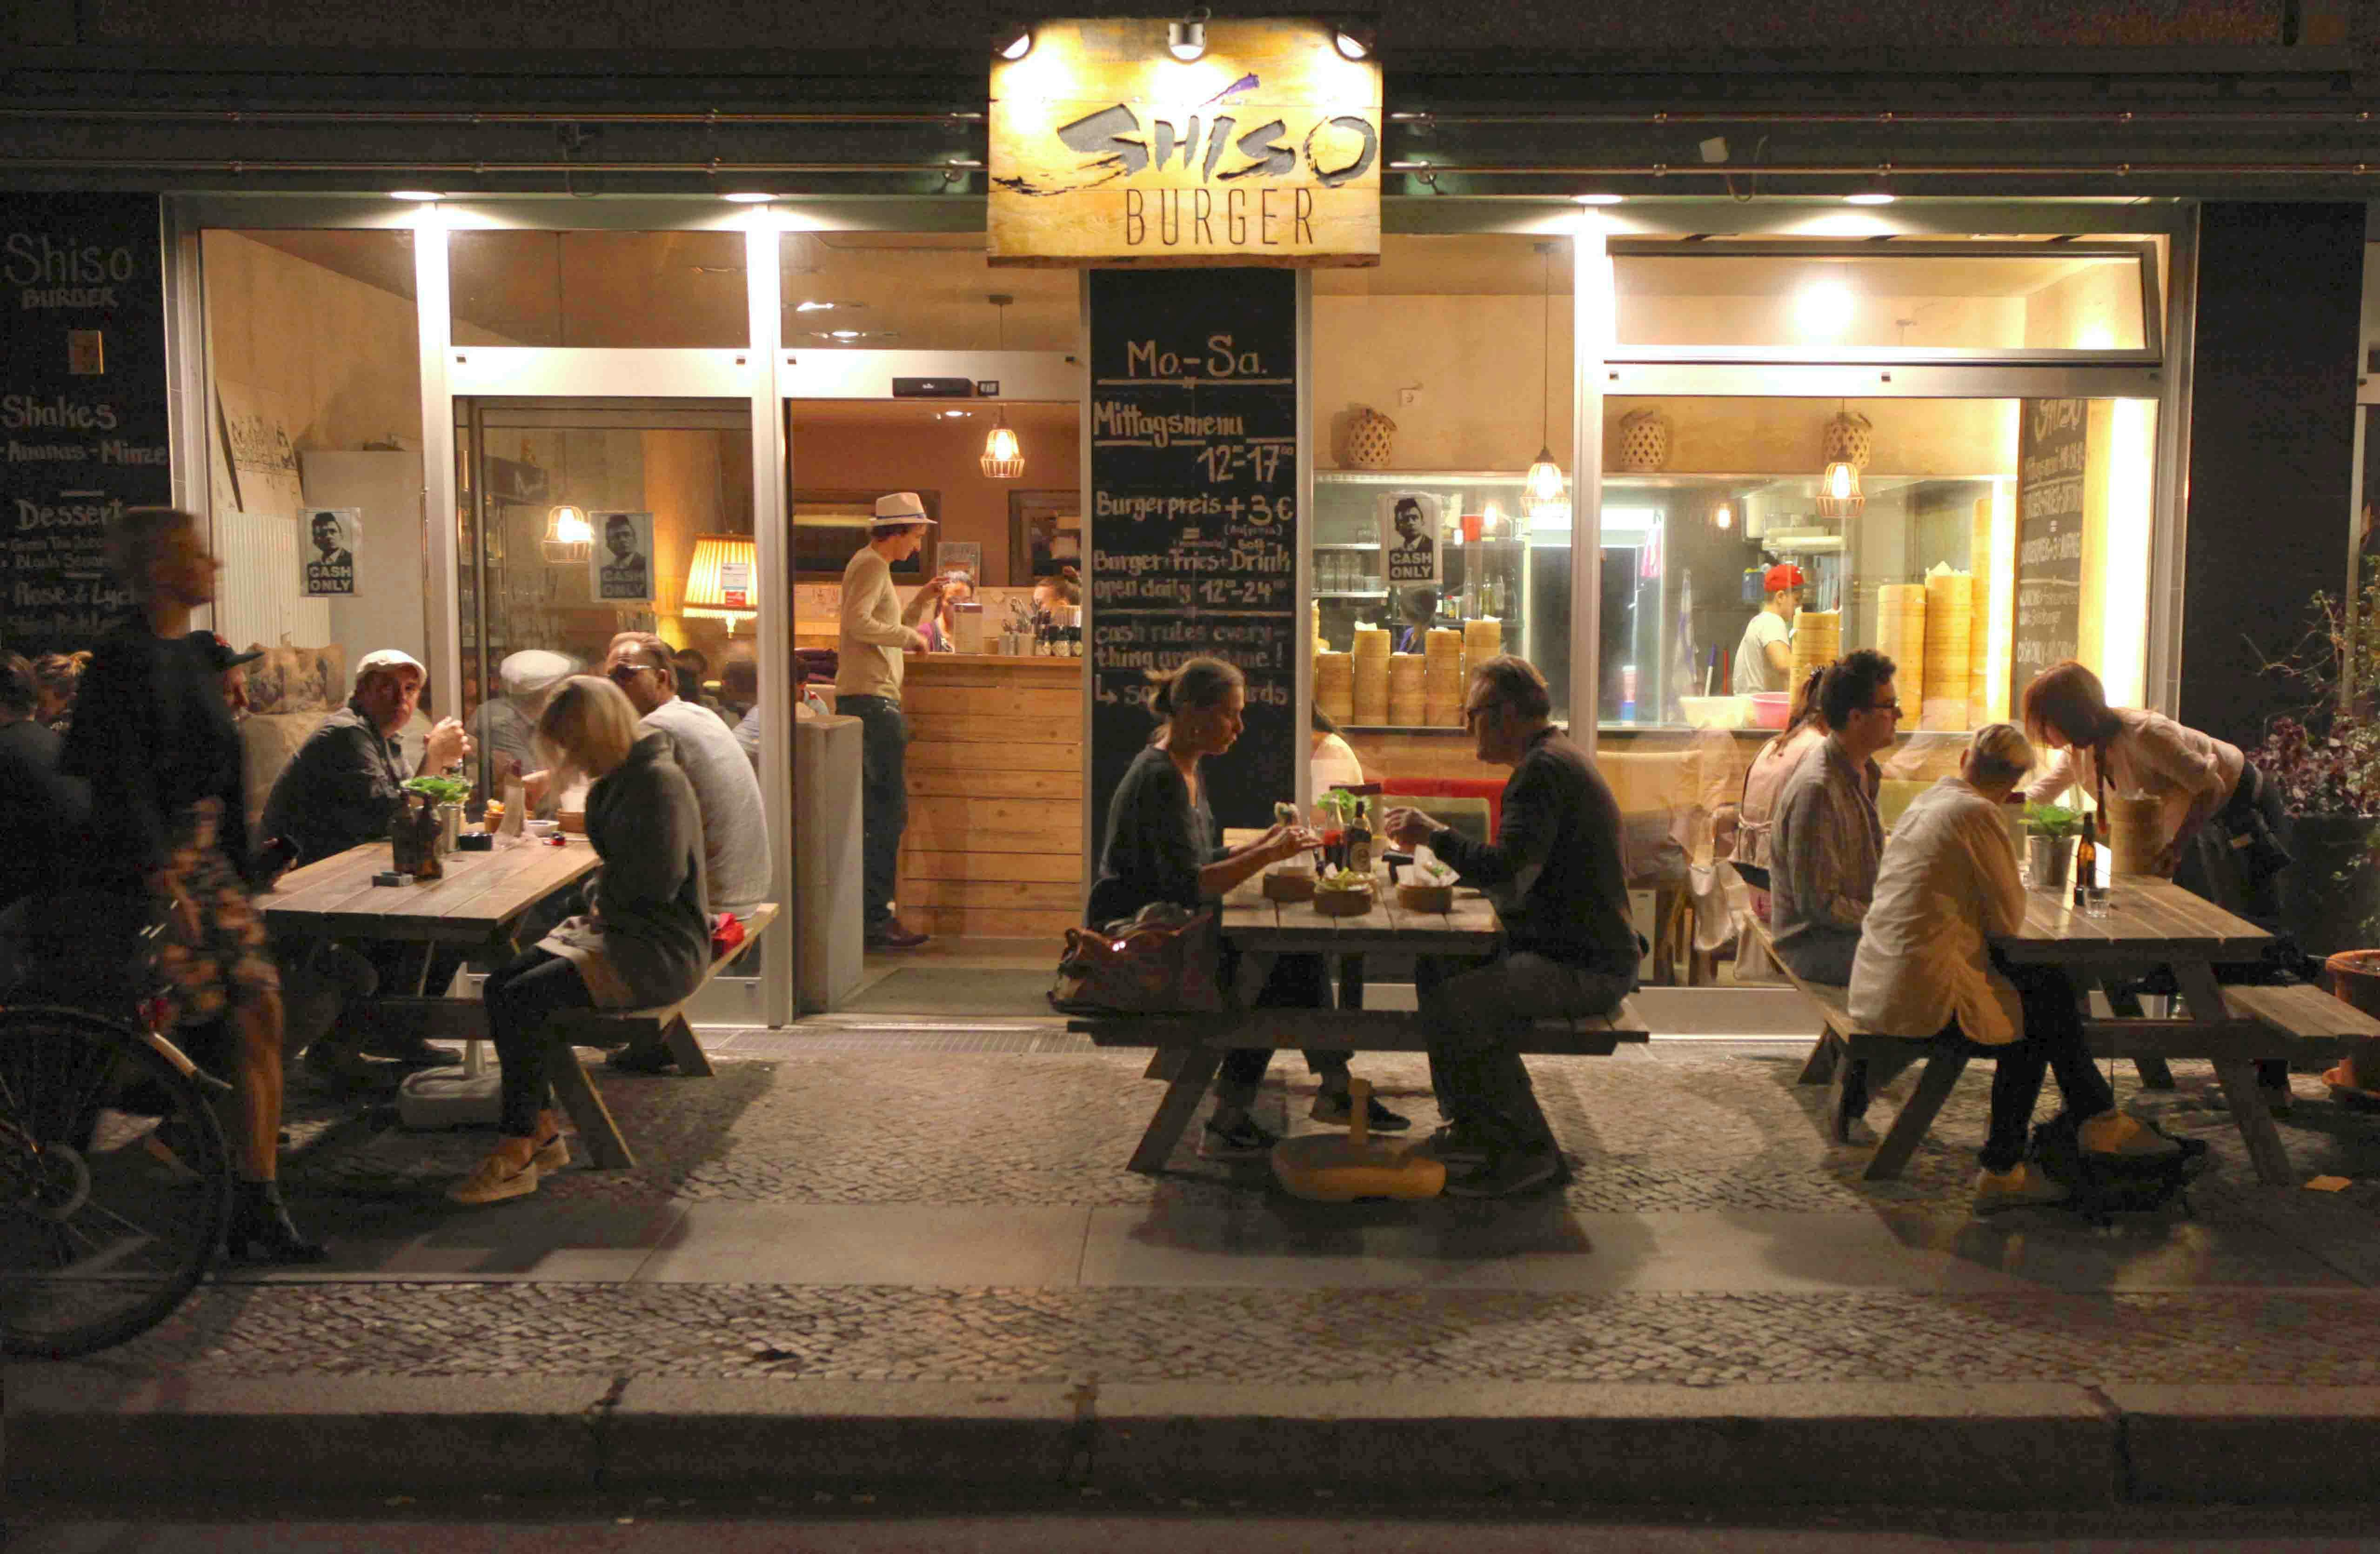 Guests enjoying their meal at Shiso Burger in Berlin